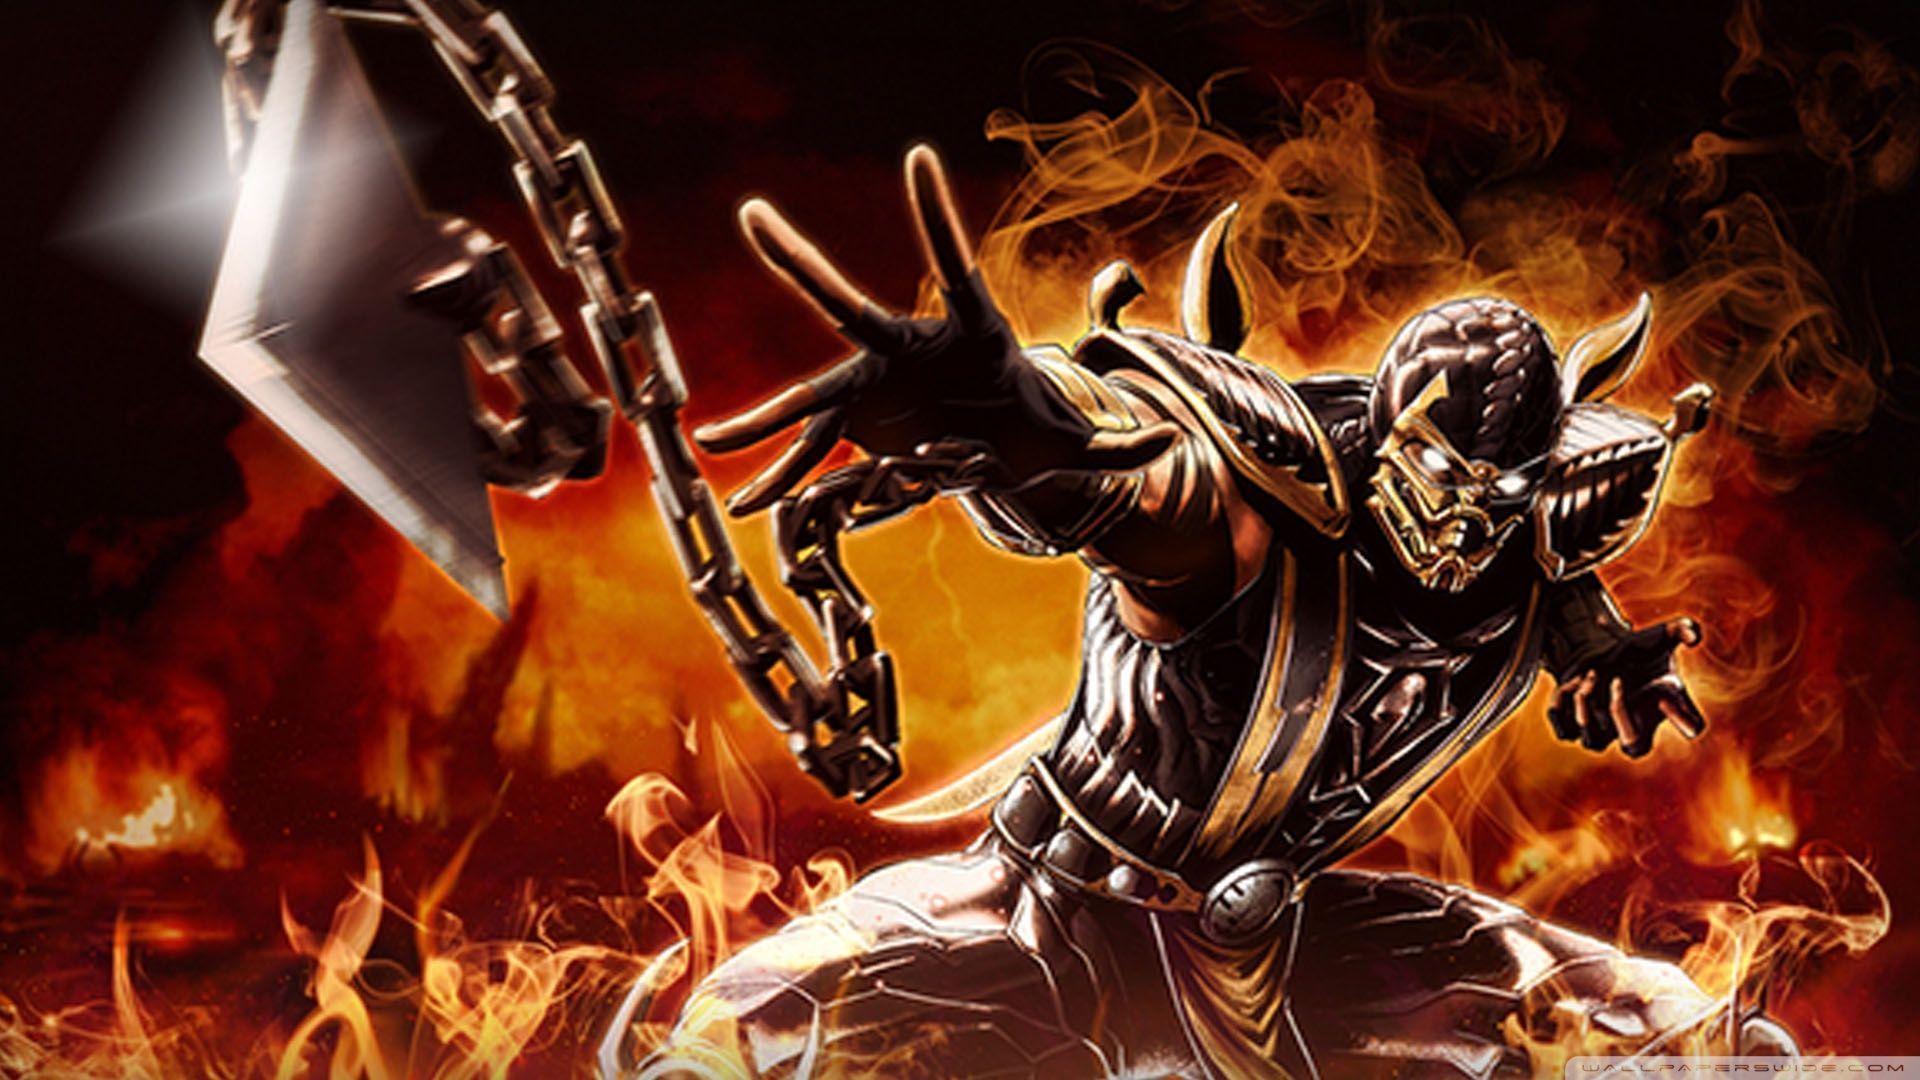 Awesome Mortal Kombat Wallpaper Free Awesome Mortal Kombat Background